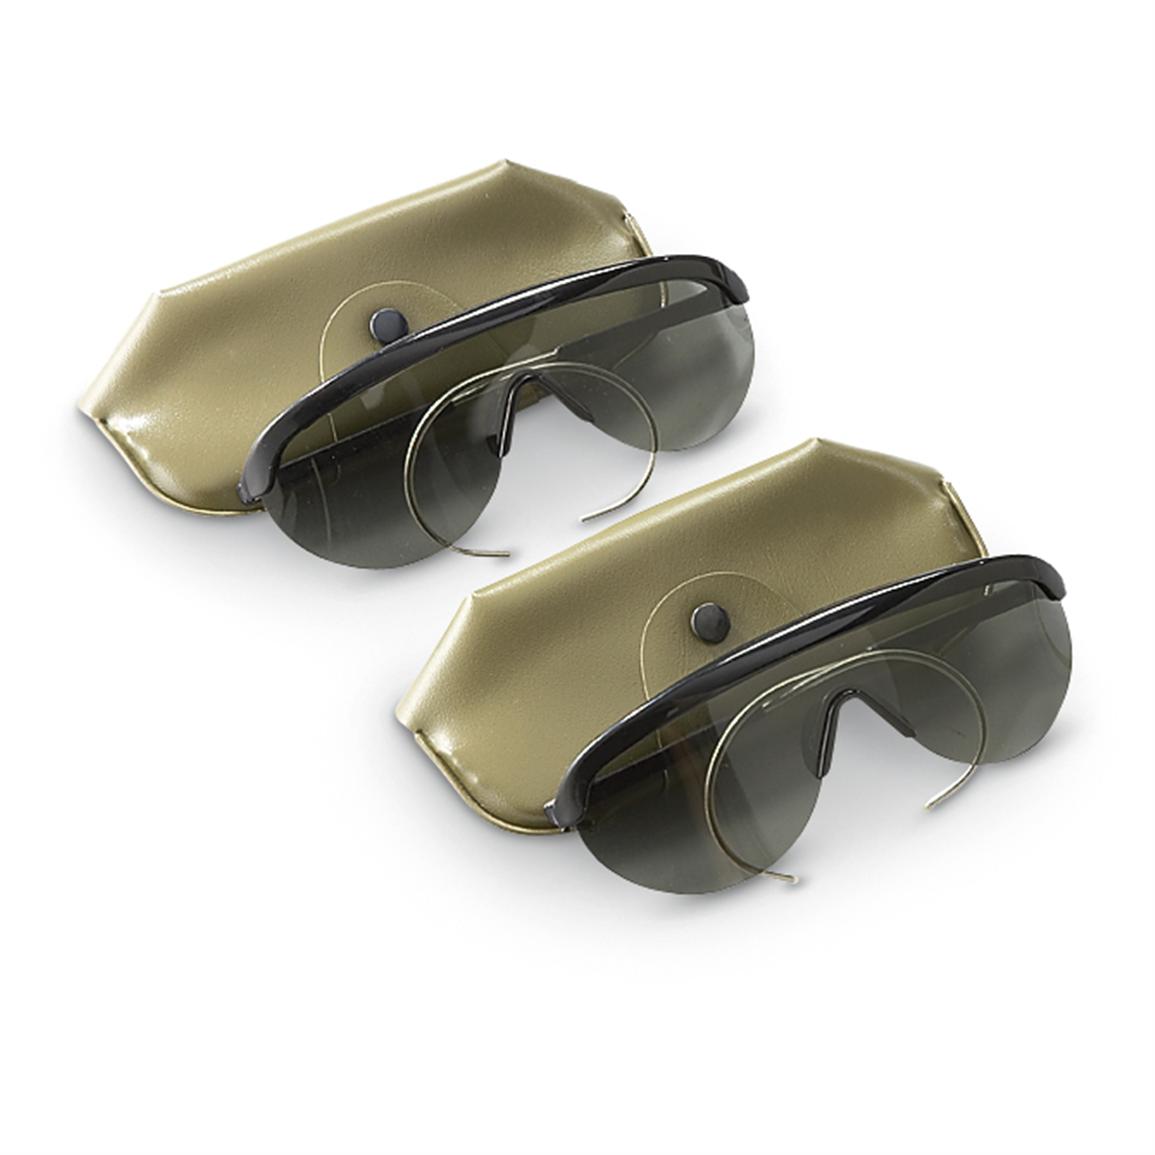 U S Military Surplus Sunglasses 2 Pack New 172648 Military Eyewear At Sportsman S Guide